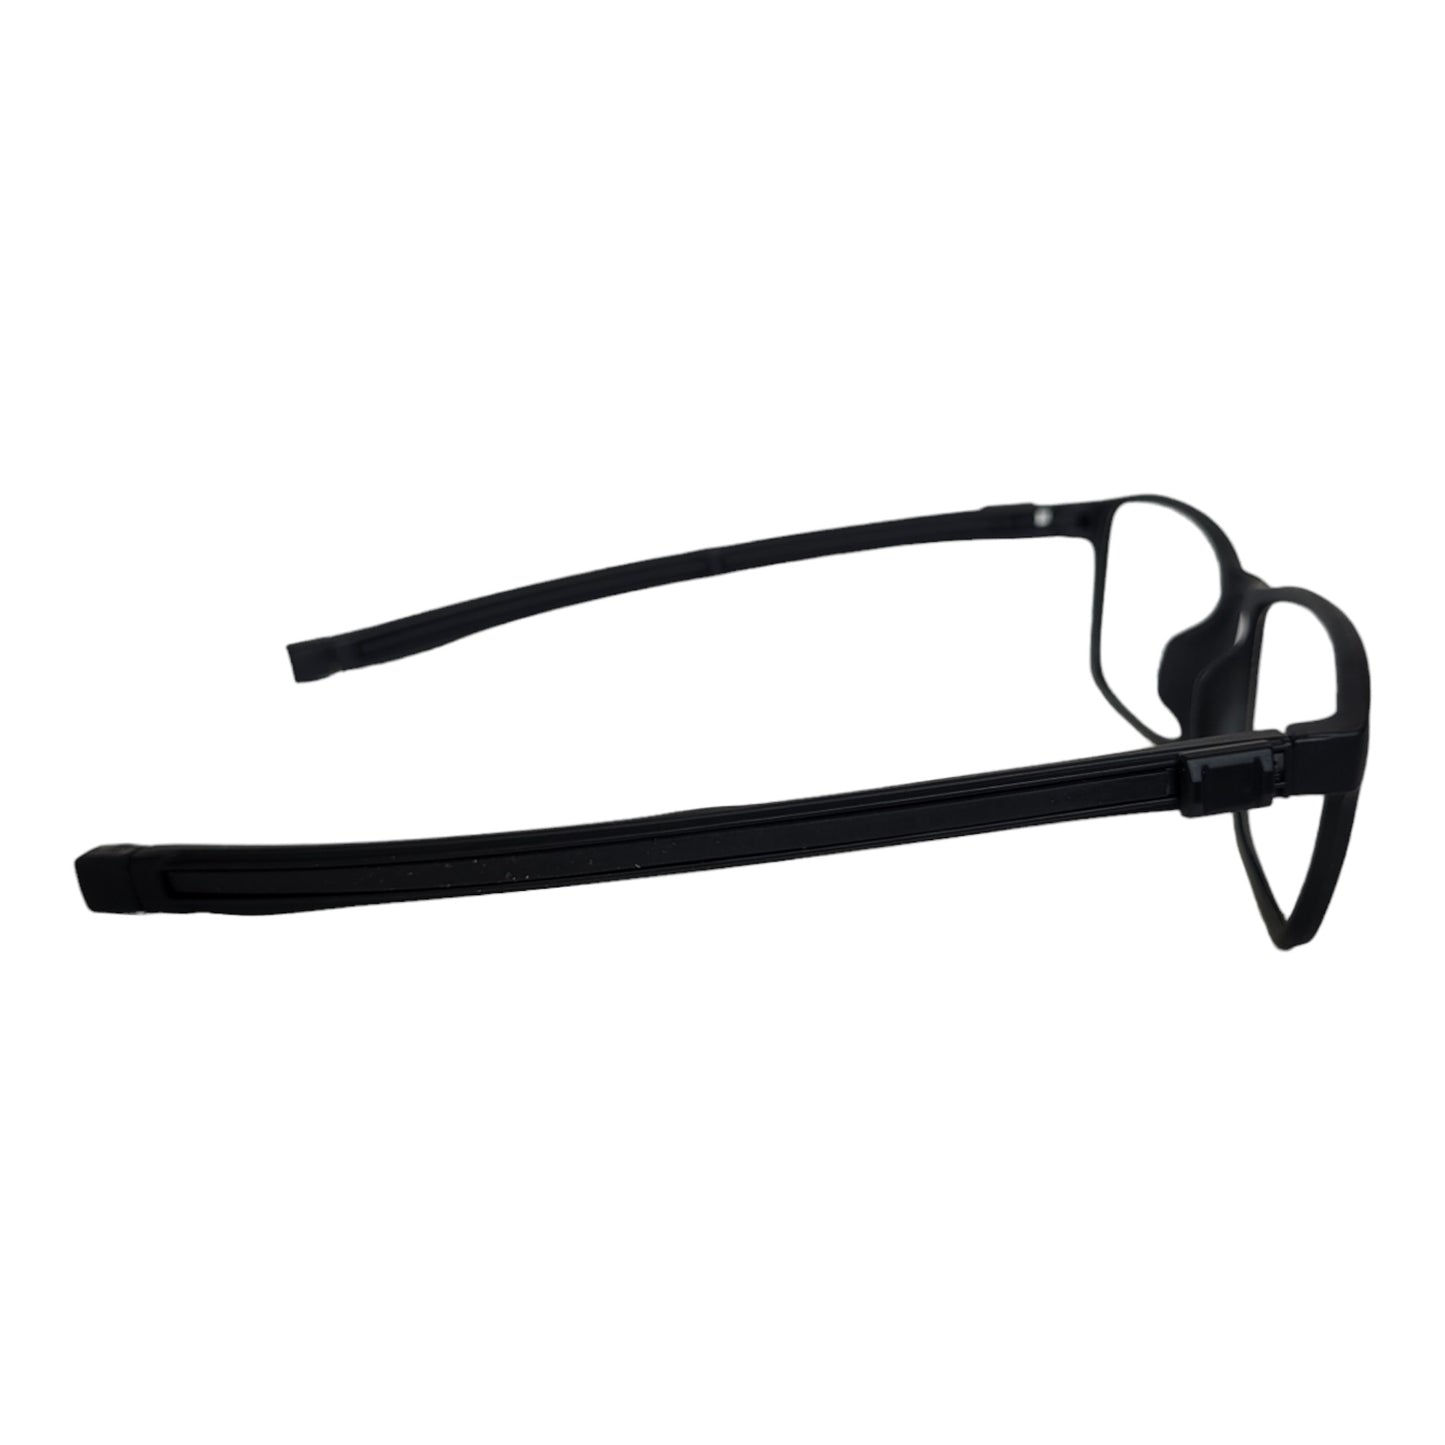 Affaires Magnetic Reading Glasses Full Rim Rectangular Unisex Spectacle Frame | Back Magnetic Connect Reader glasses | Color Black